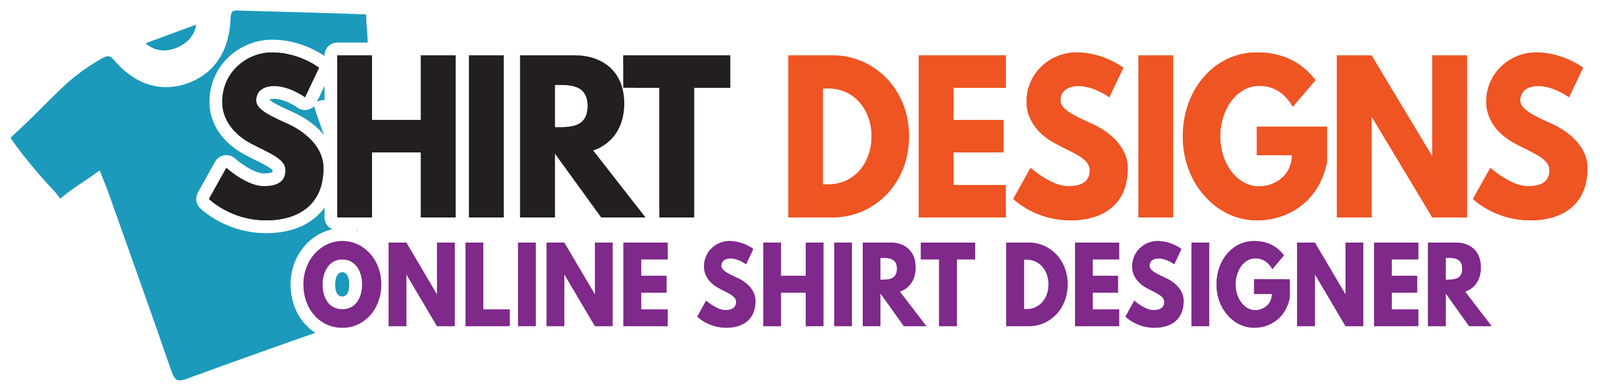 Shirt Designs Online